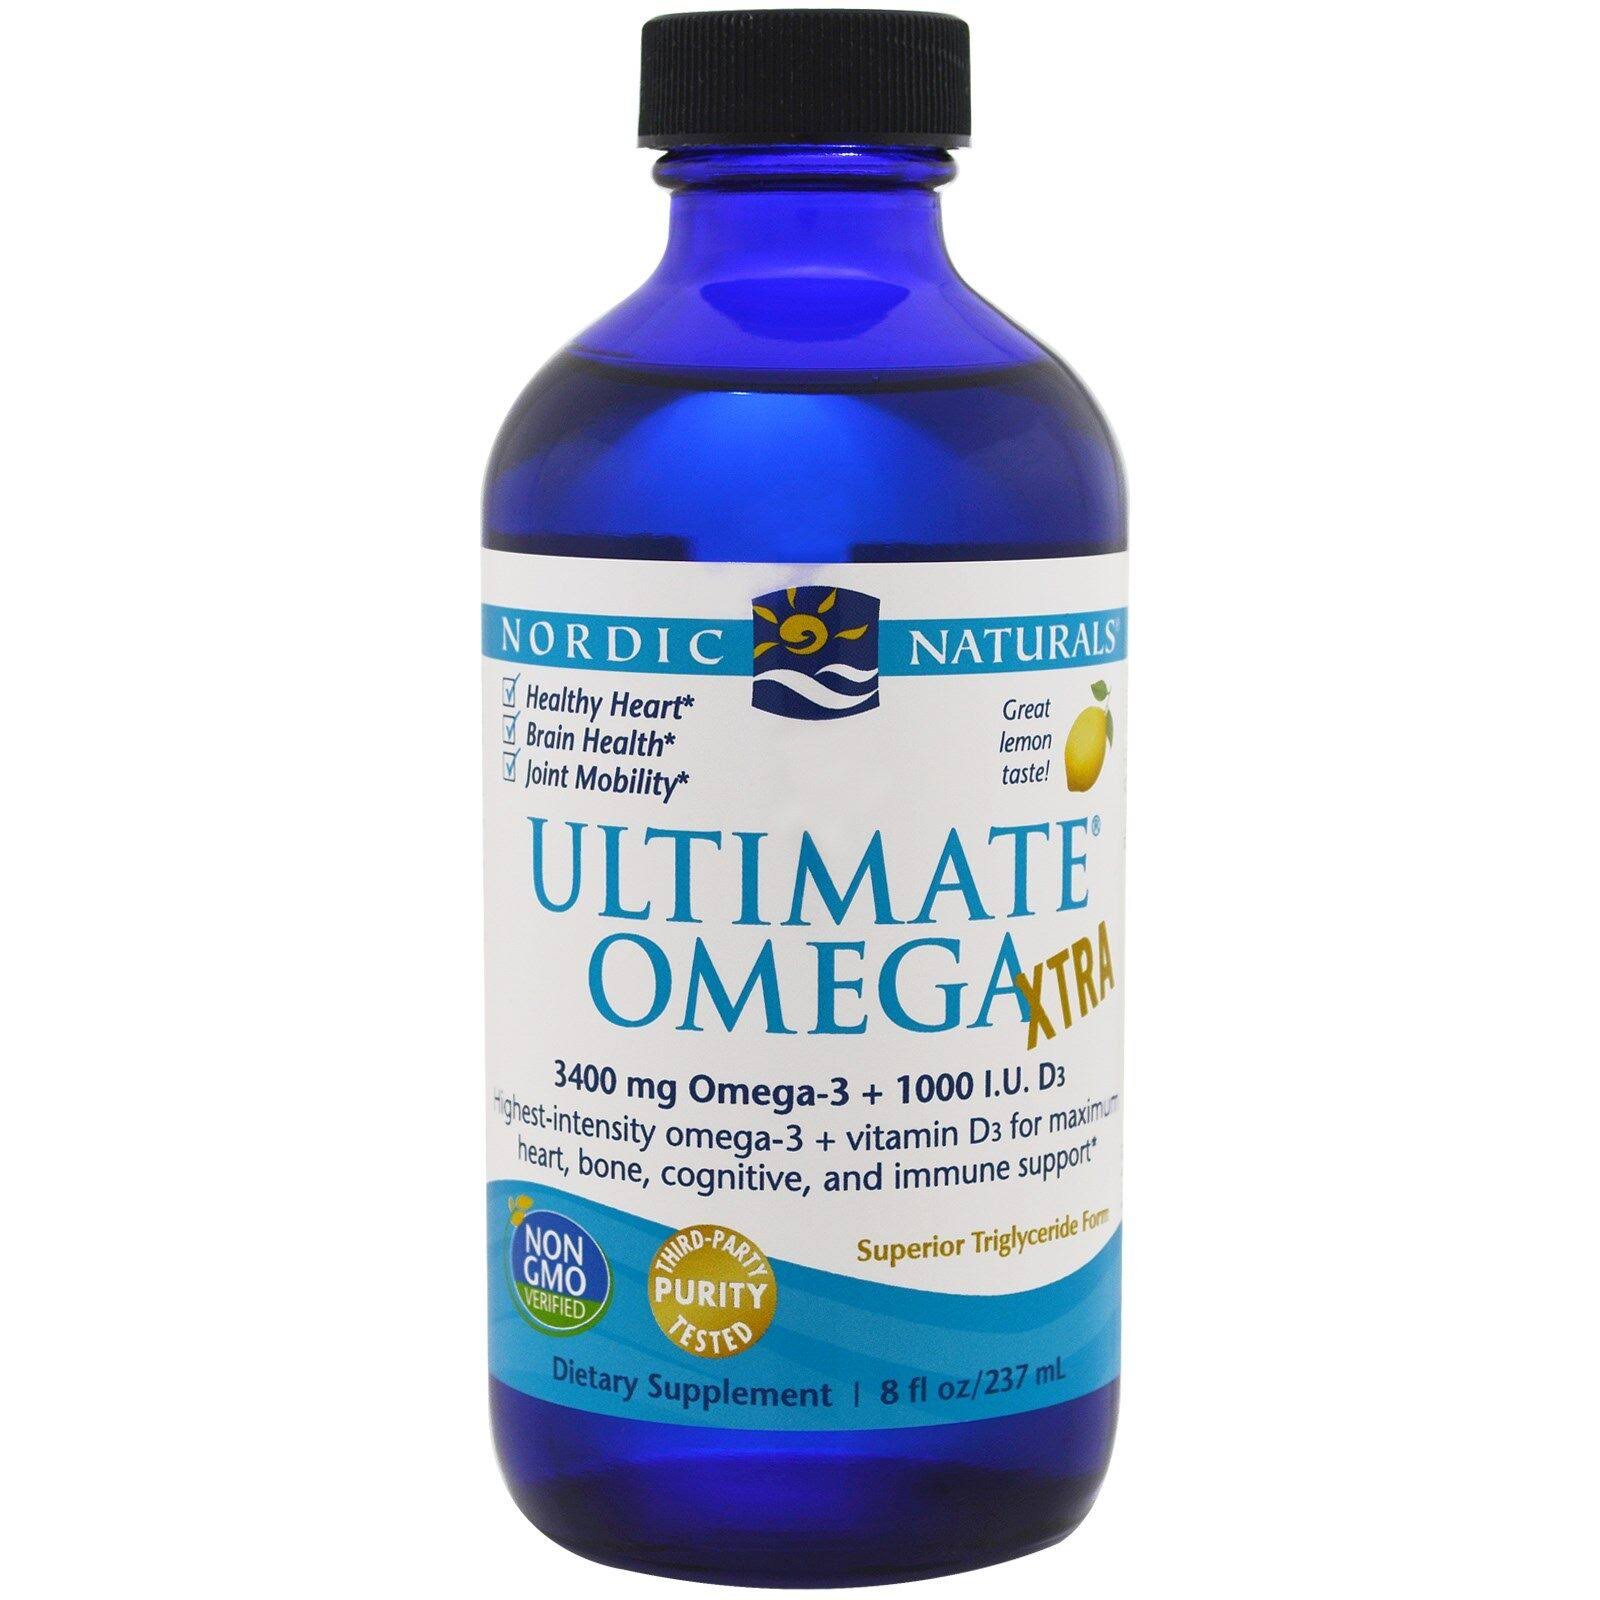 Nordic Naturals Ultimate Omega Xtra Supplement - Lemon, 8oz